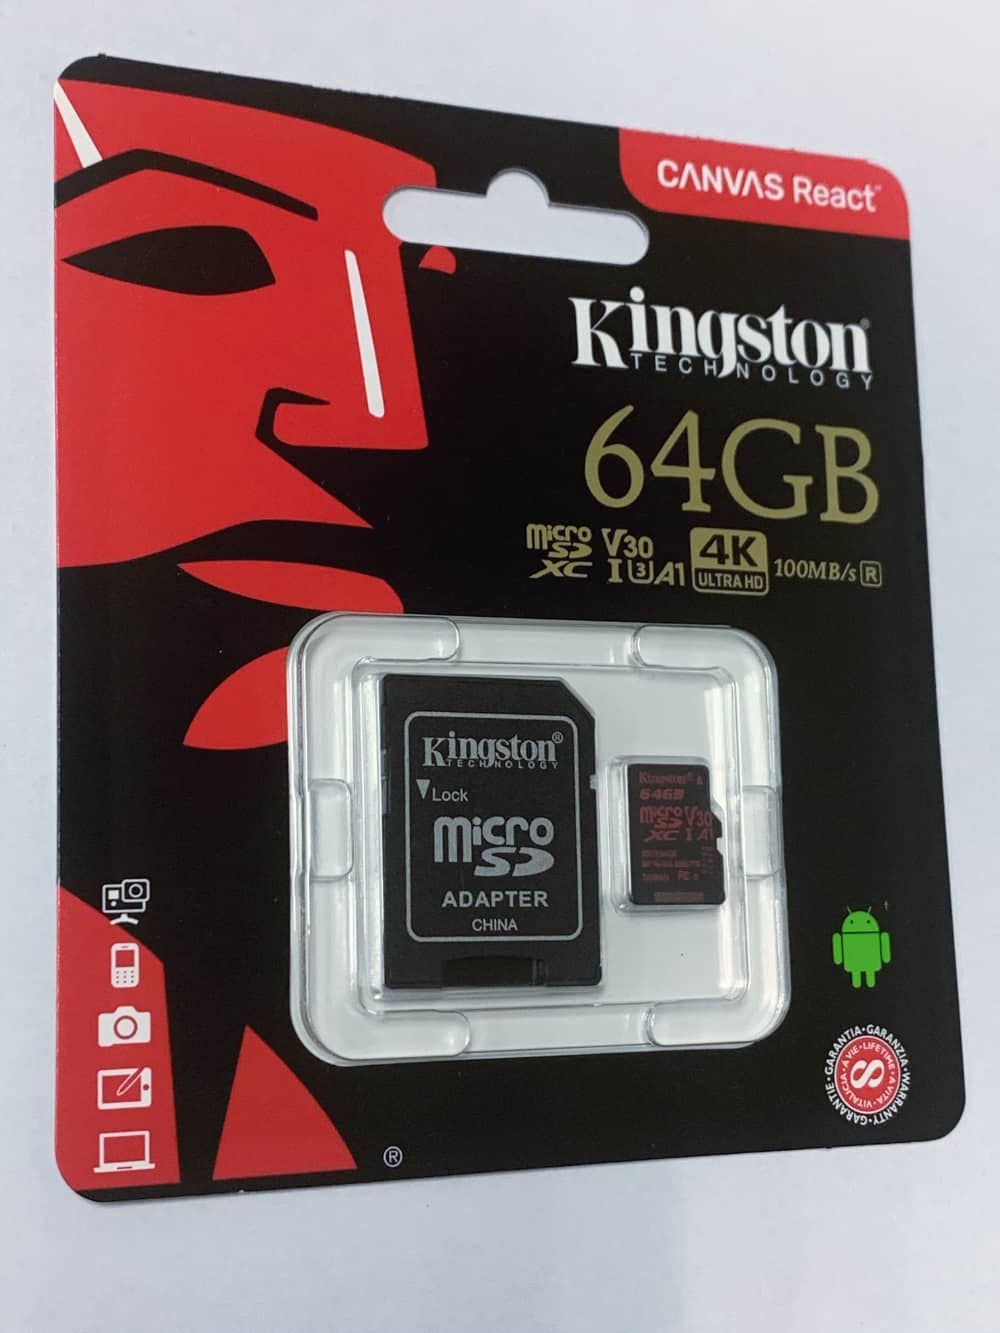 Kingston microSDXC 64GB Canvas REACT + Adapter, SDCR/64GB